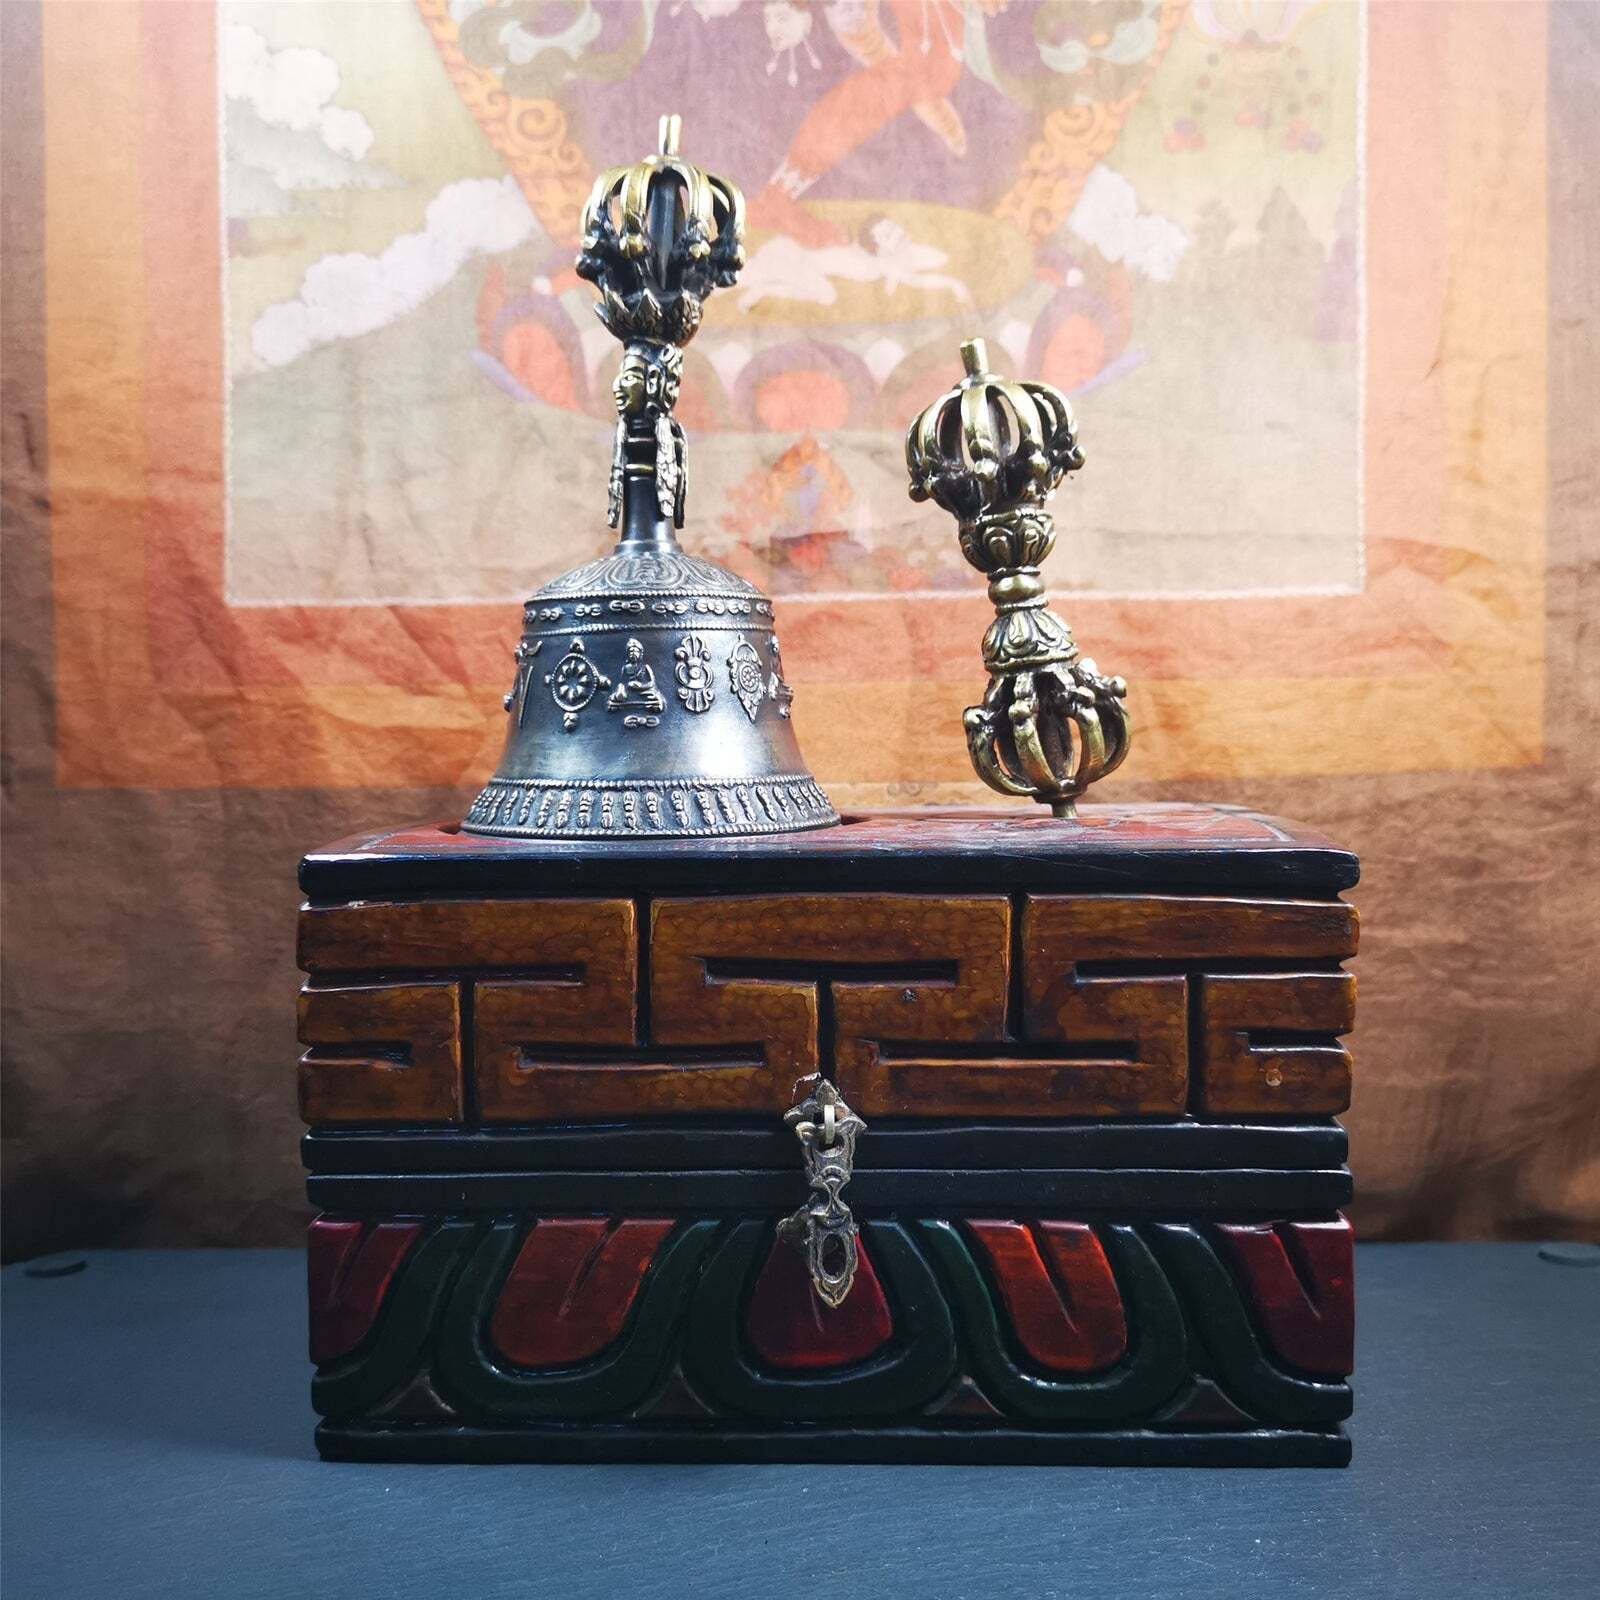 Gandhanra Vintage Vajra & Bell Set,Tibetan Buddhism (Vajrayana) Ritual Implement